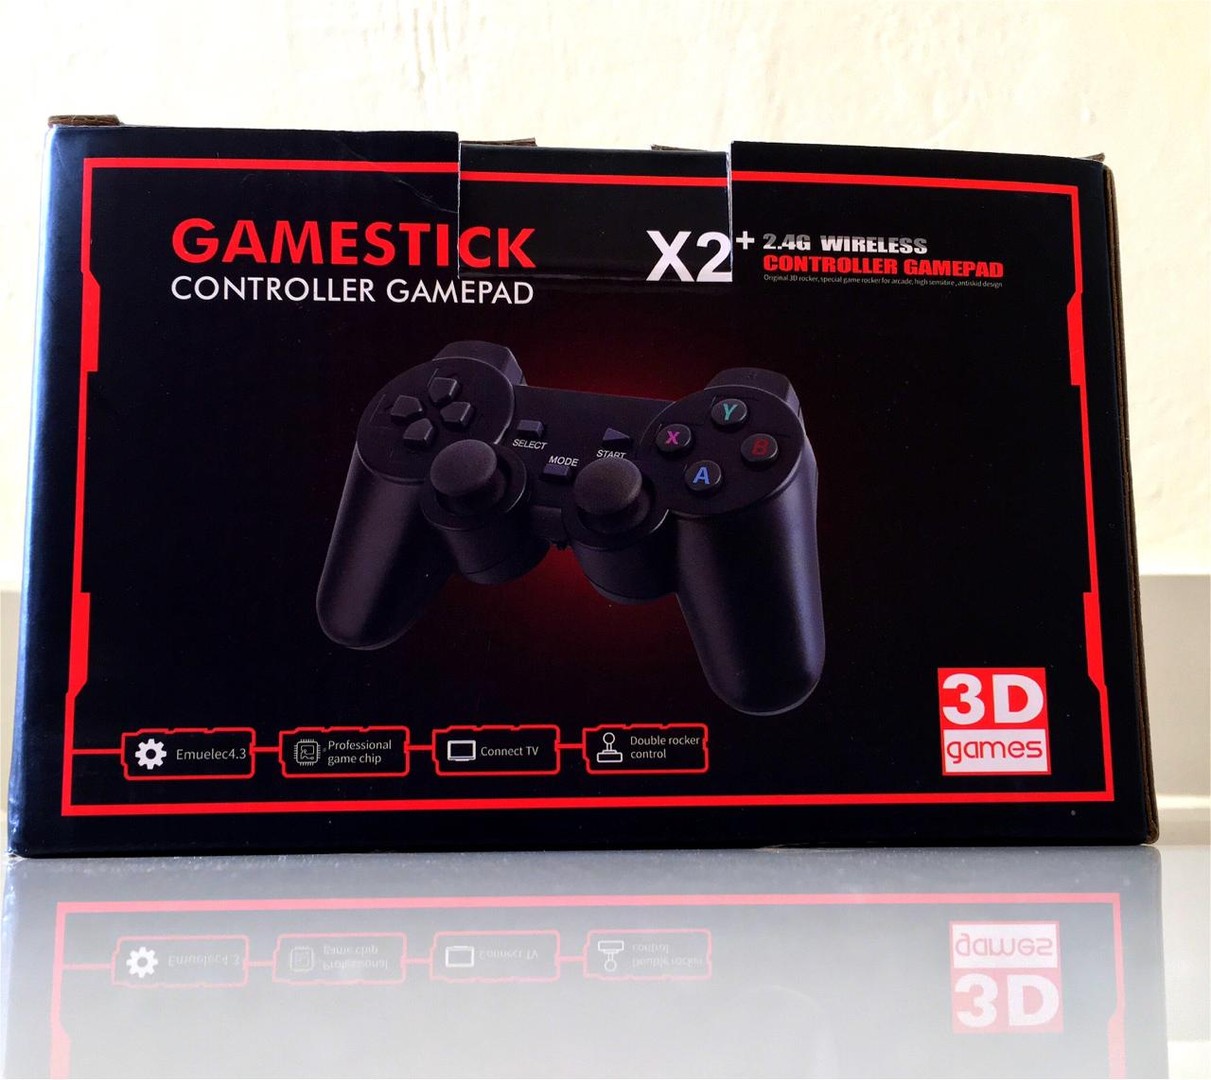 consolas y videojuegos - GameStick Controller Gamepad + 2.4G Wireless!  0